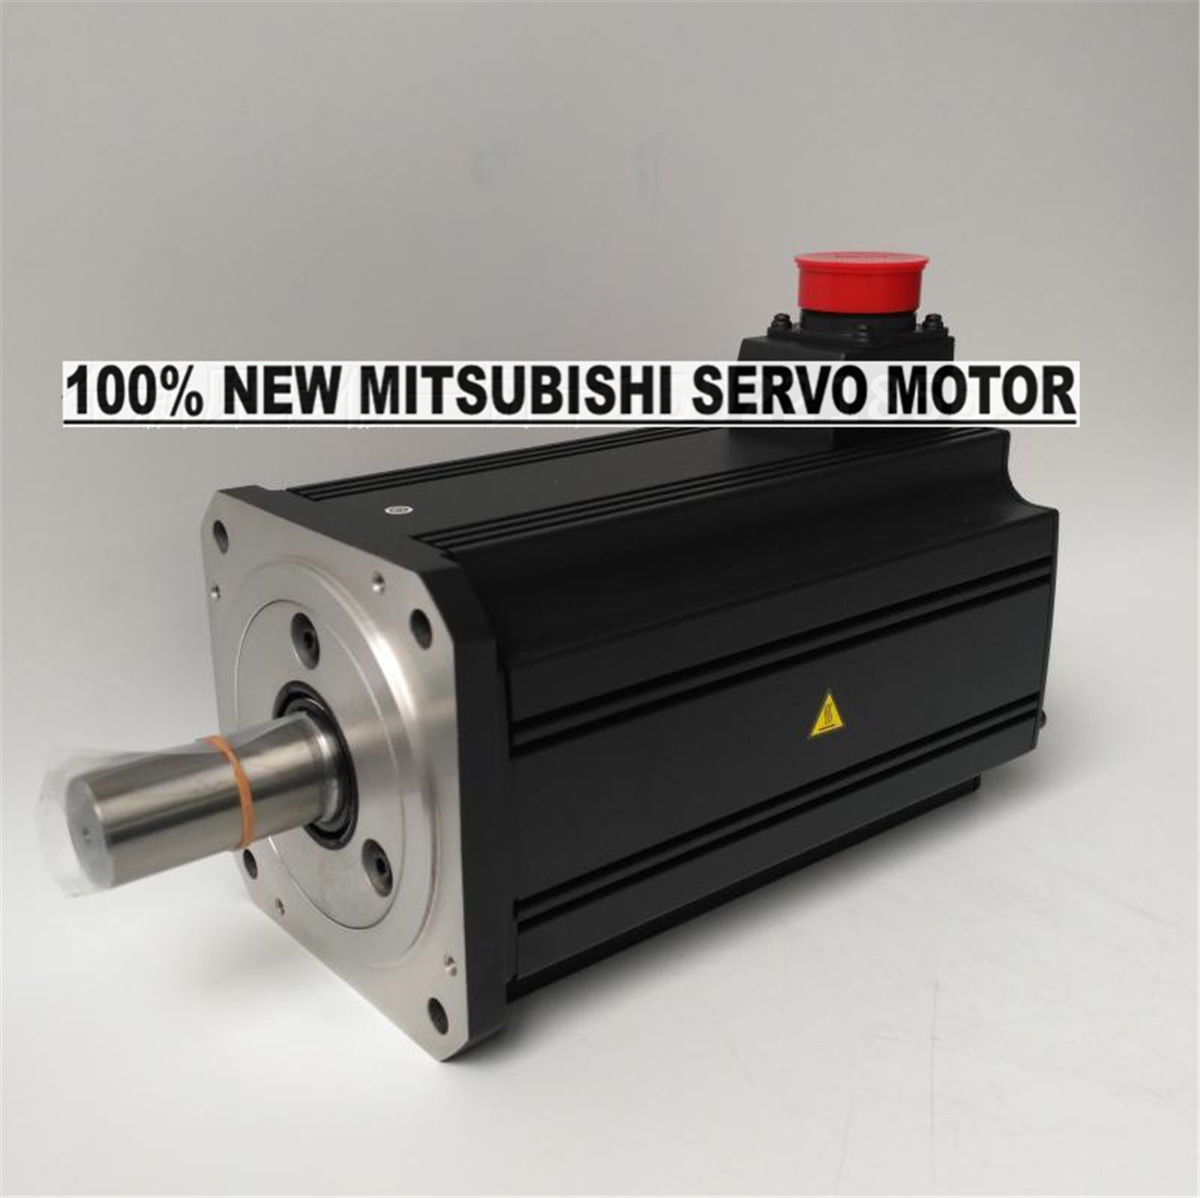 Brand NEW Mitsubishi Servo Motor HG-RR503 in box HGRR503 - Click Image to Close